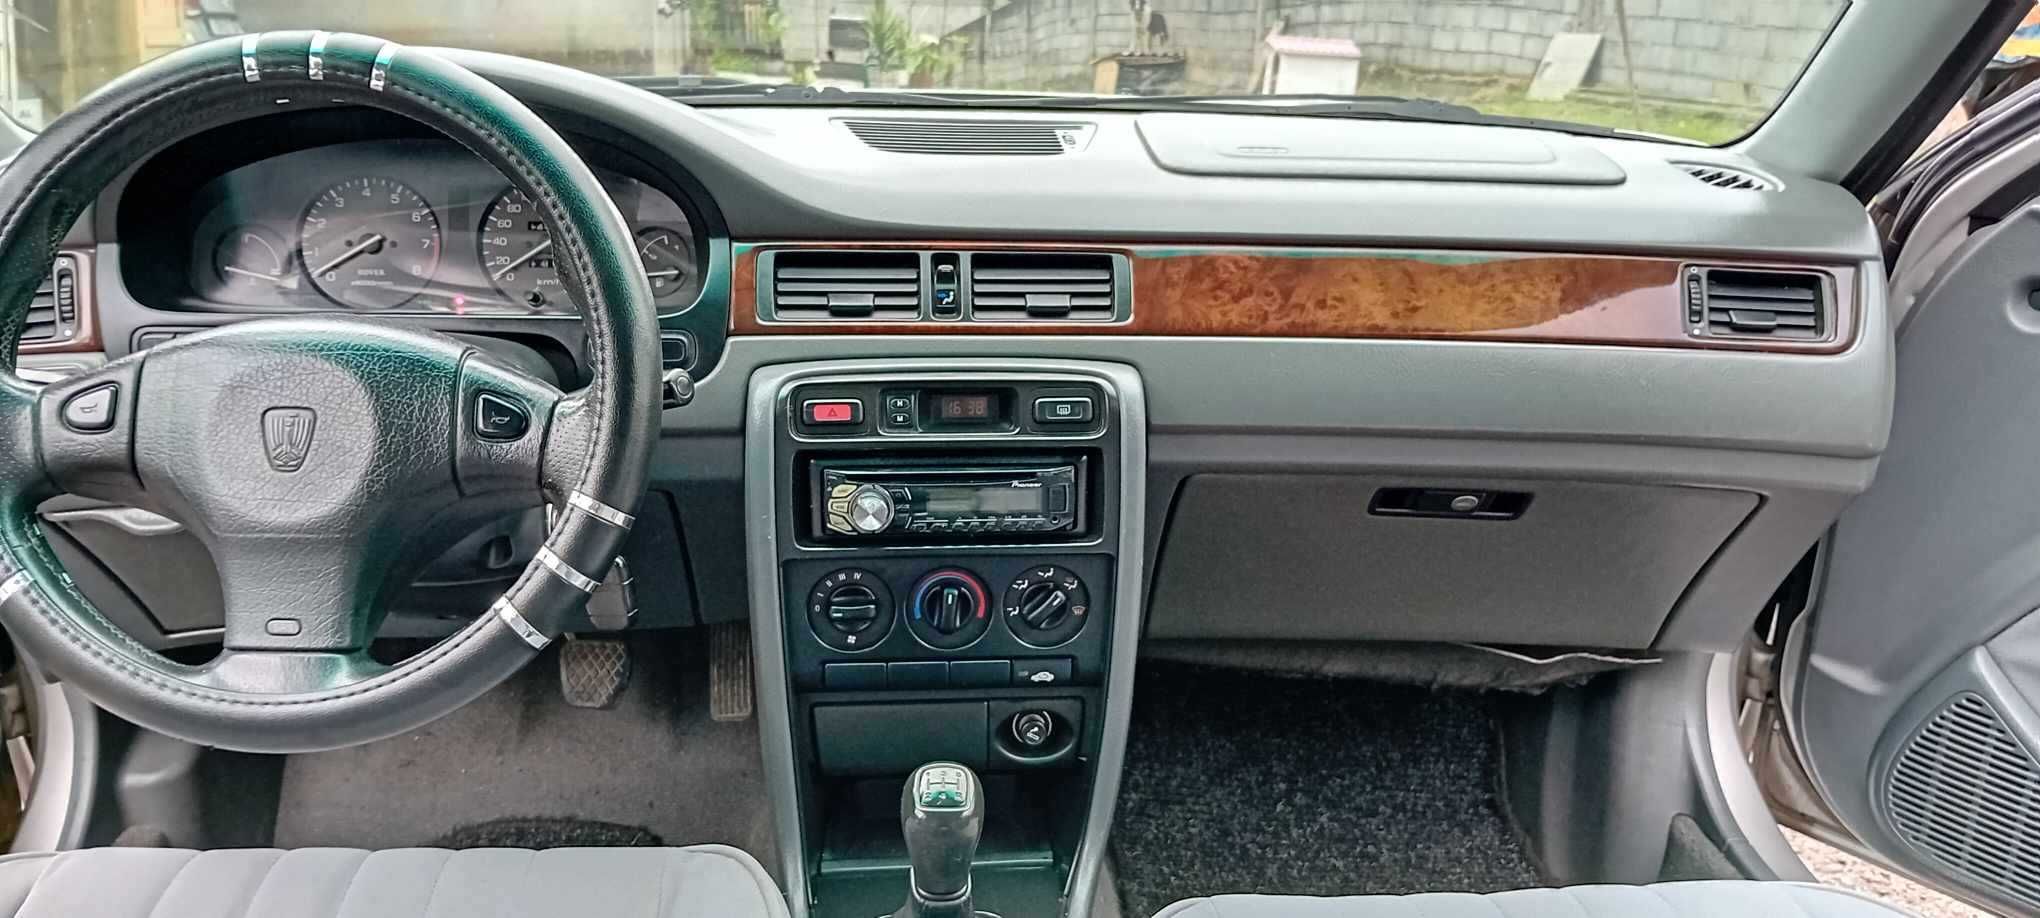 Rover 400 1.4 16v